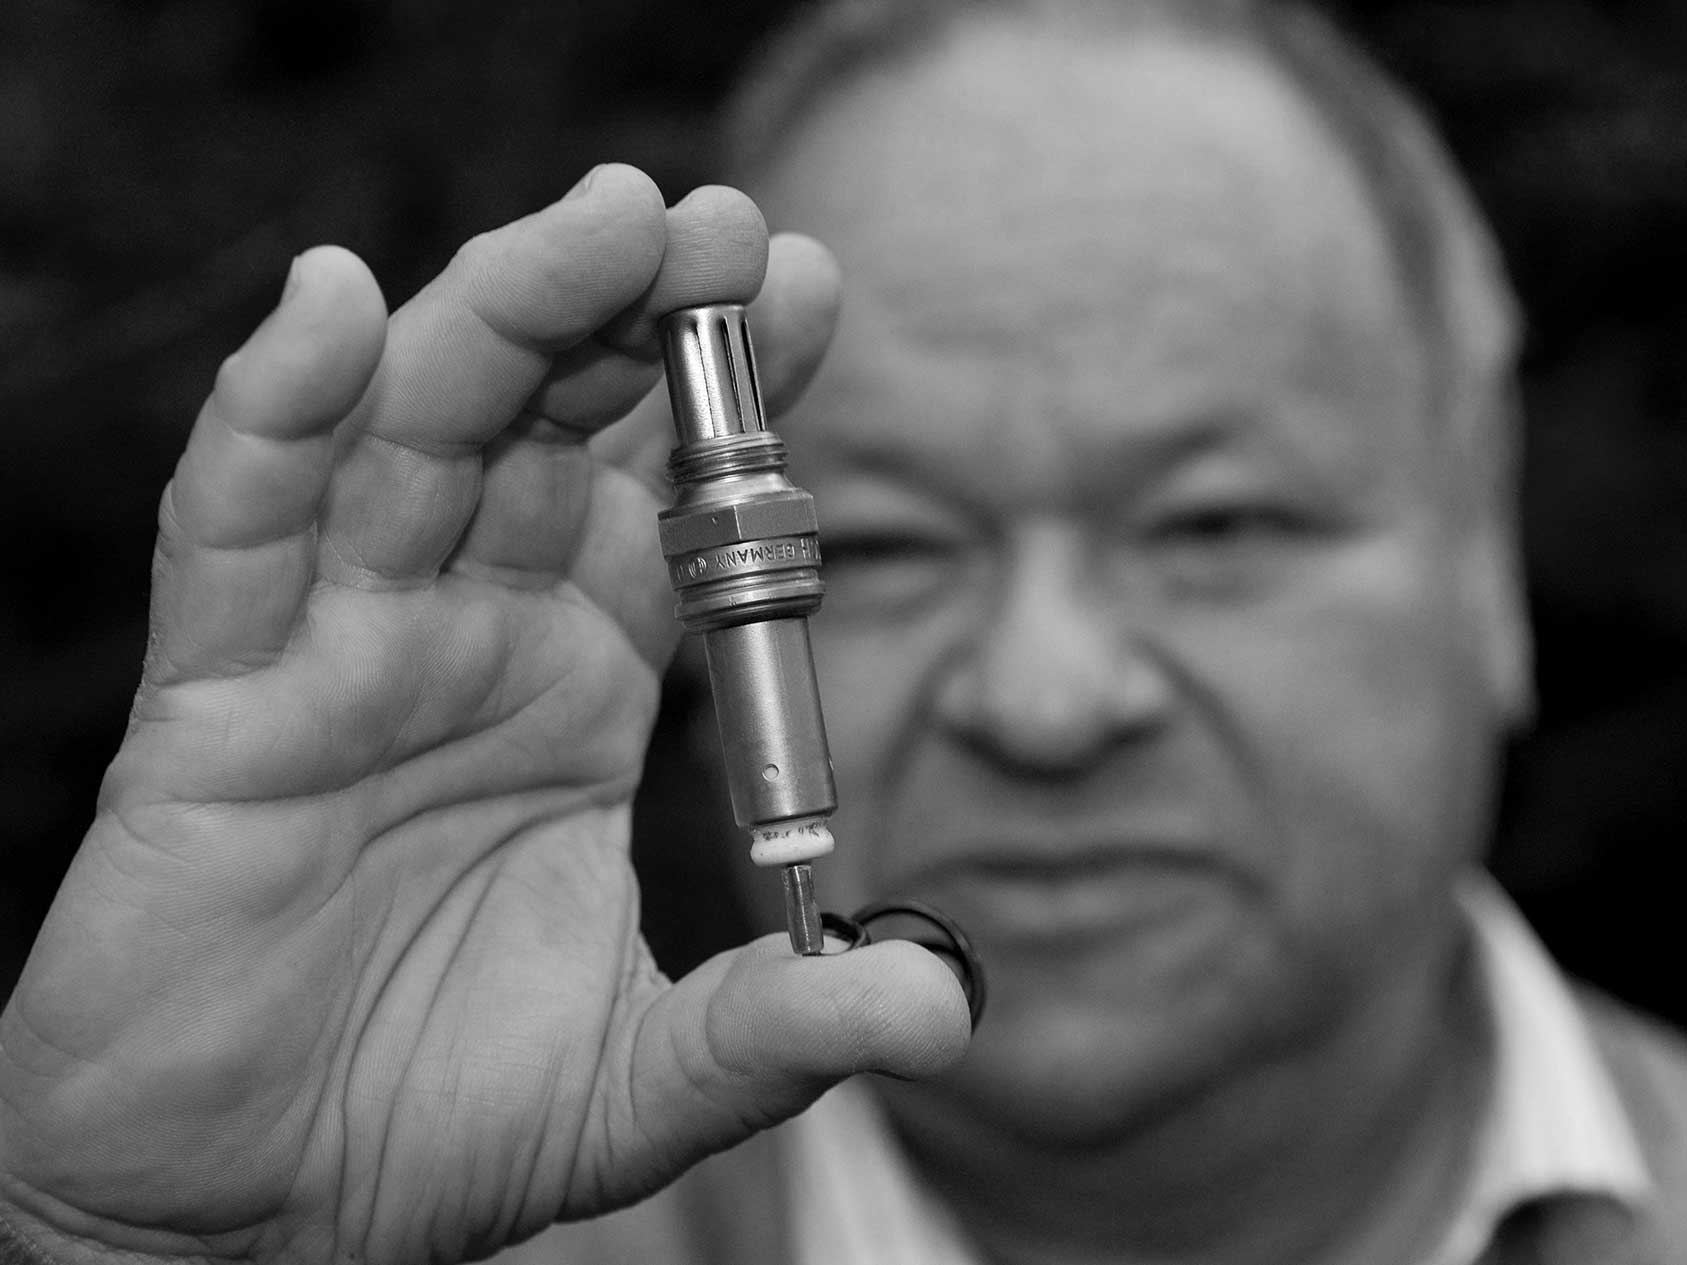 An elderly gentleman shown holding a spark plug.